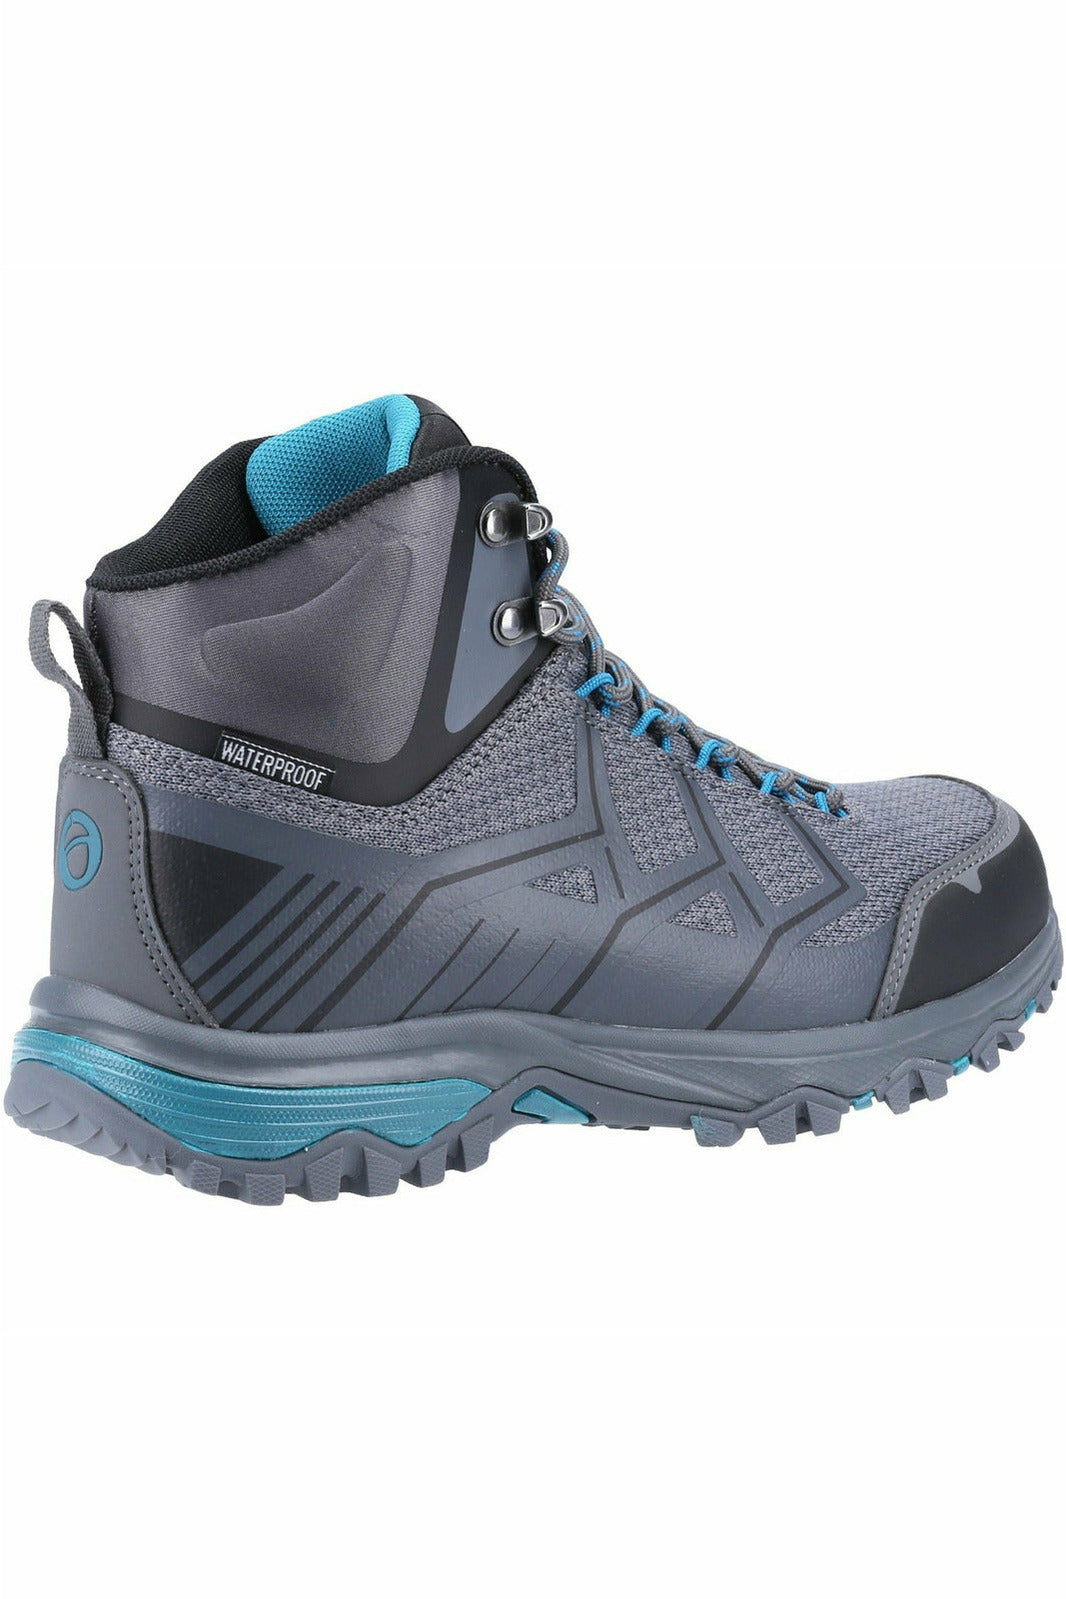 Cotswold - Wychwood Mid Ladies waterproof Hiking Boots